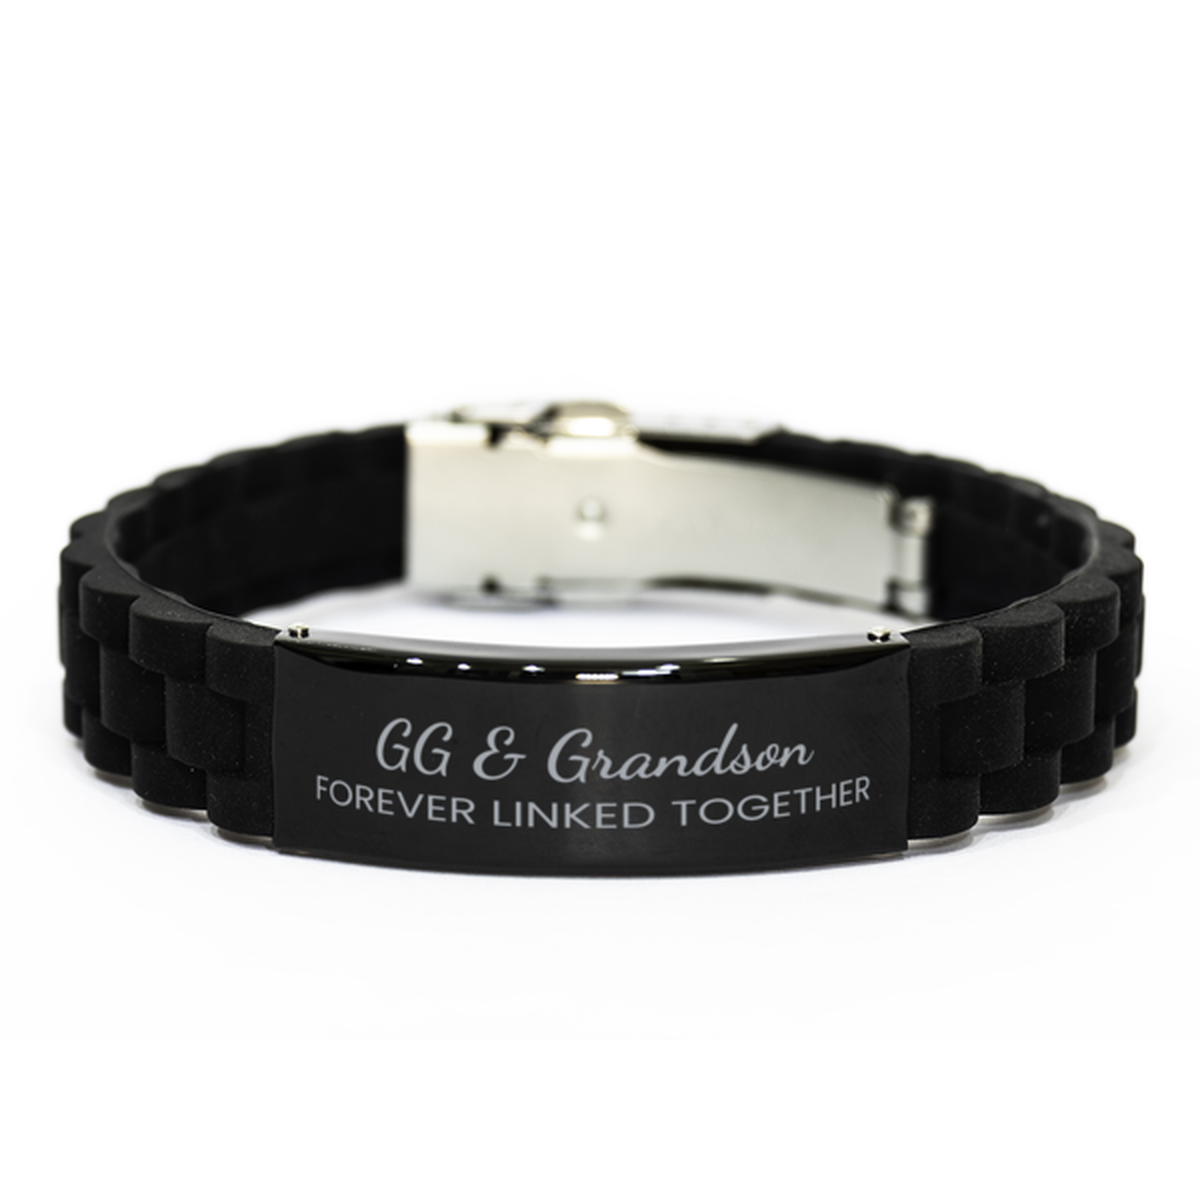 GG and Grandson Forever Linked Together Bracelet, GG Grandson Bracelet, Black Stainless Steel Silicone Bracelet, Birthday, Christmas.